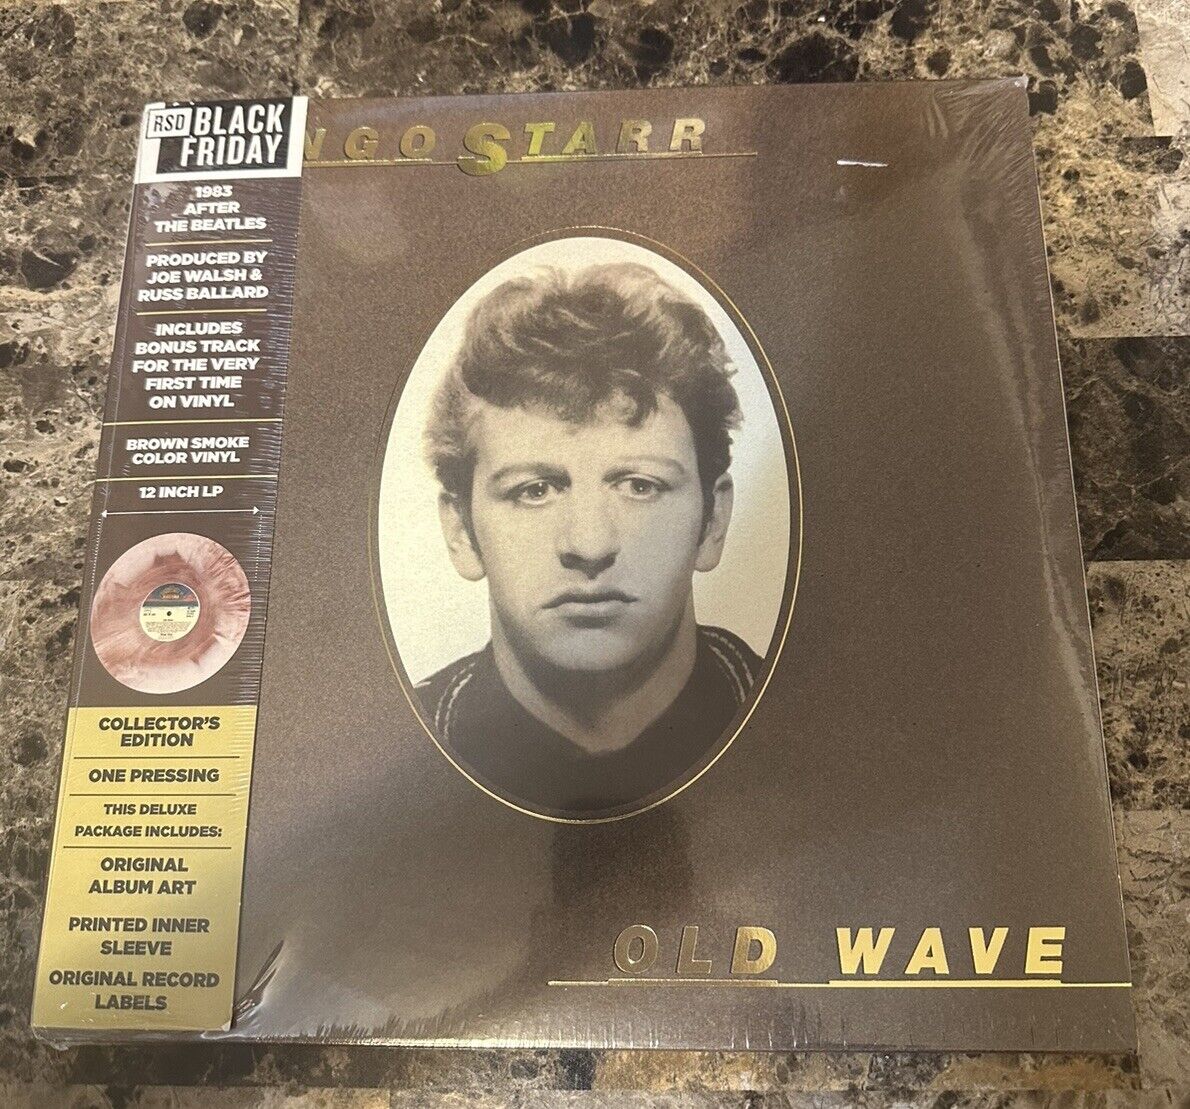 Ringo Starr - Old Wave, 1 LP, 2022 RSD Black Friday, Brown/Smoke Vinyl, Sealed